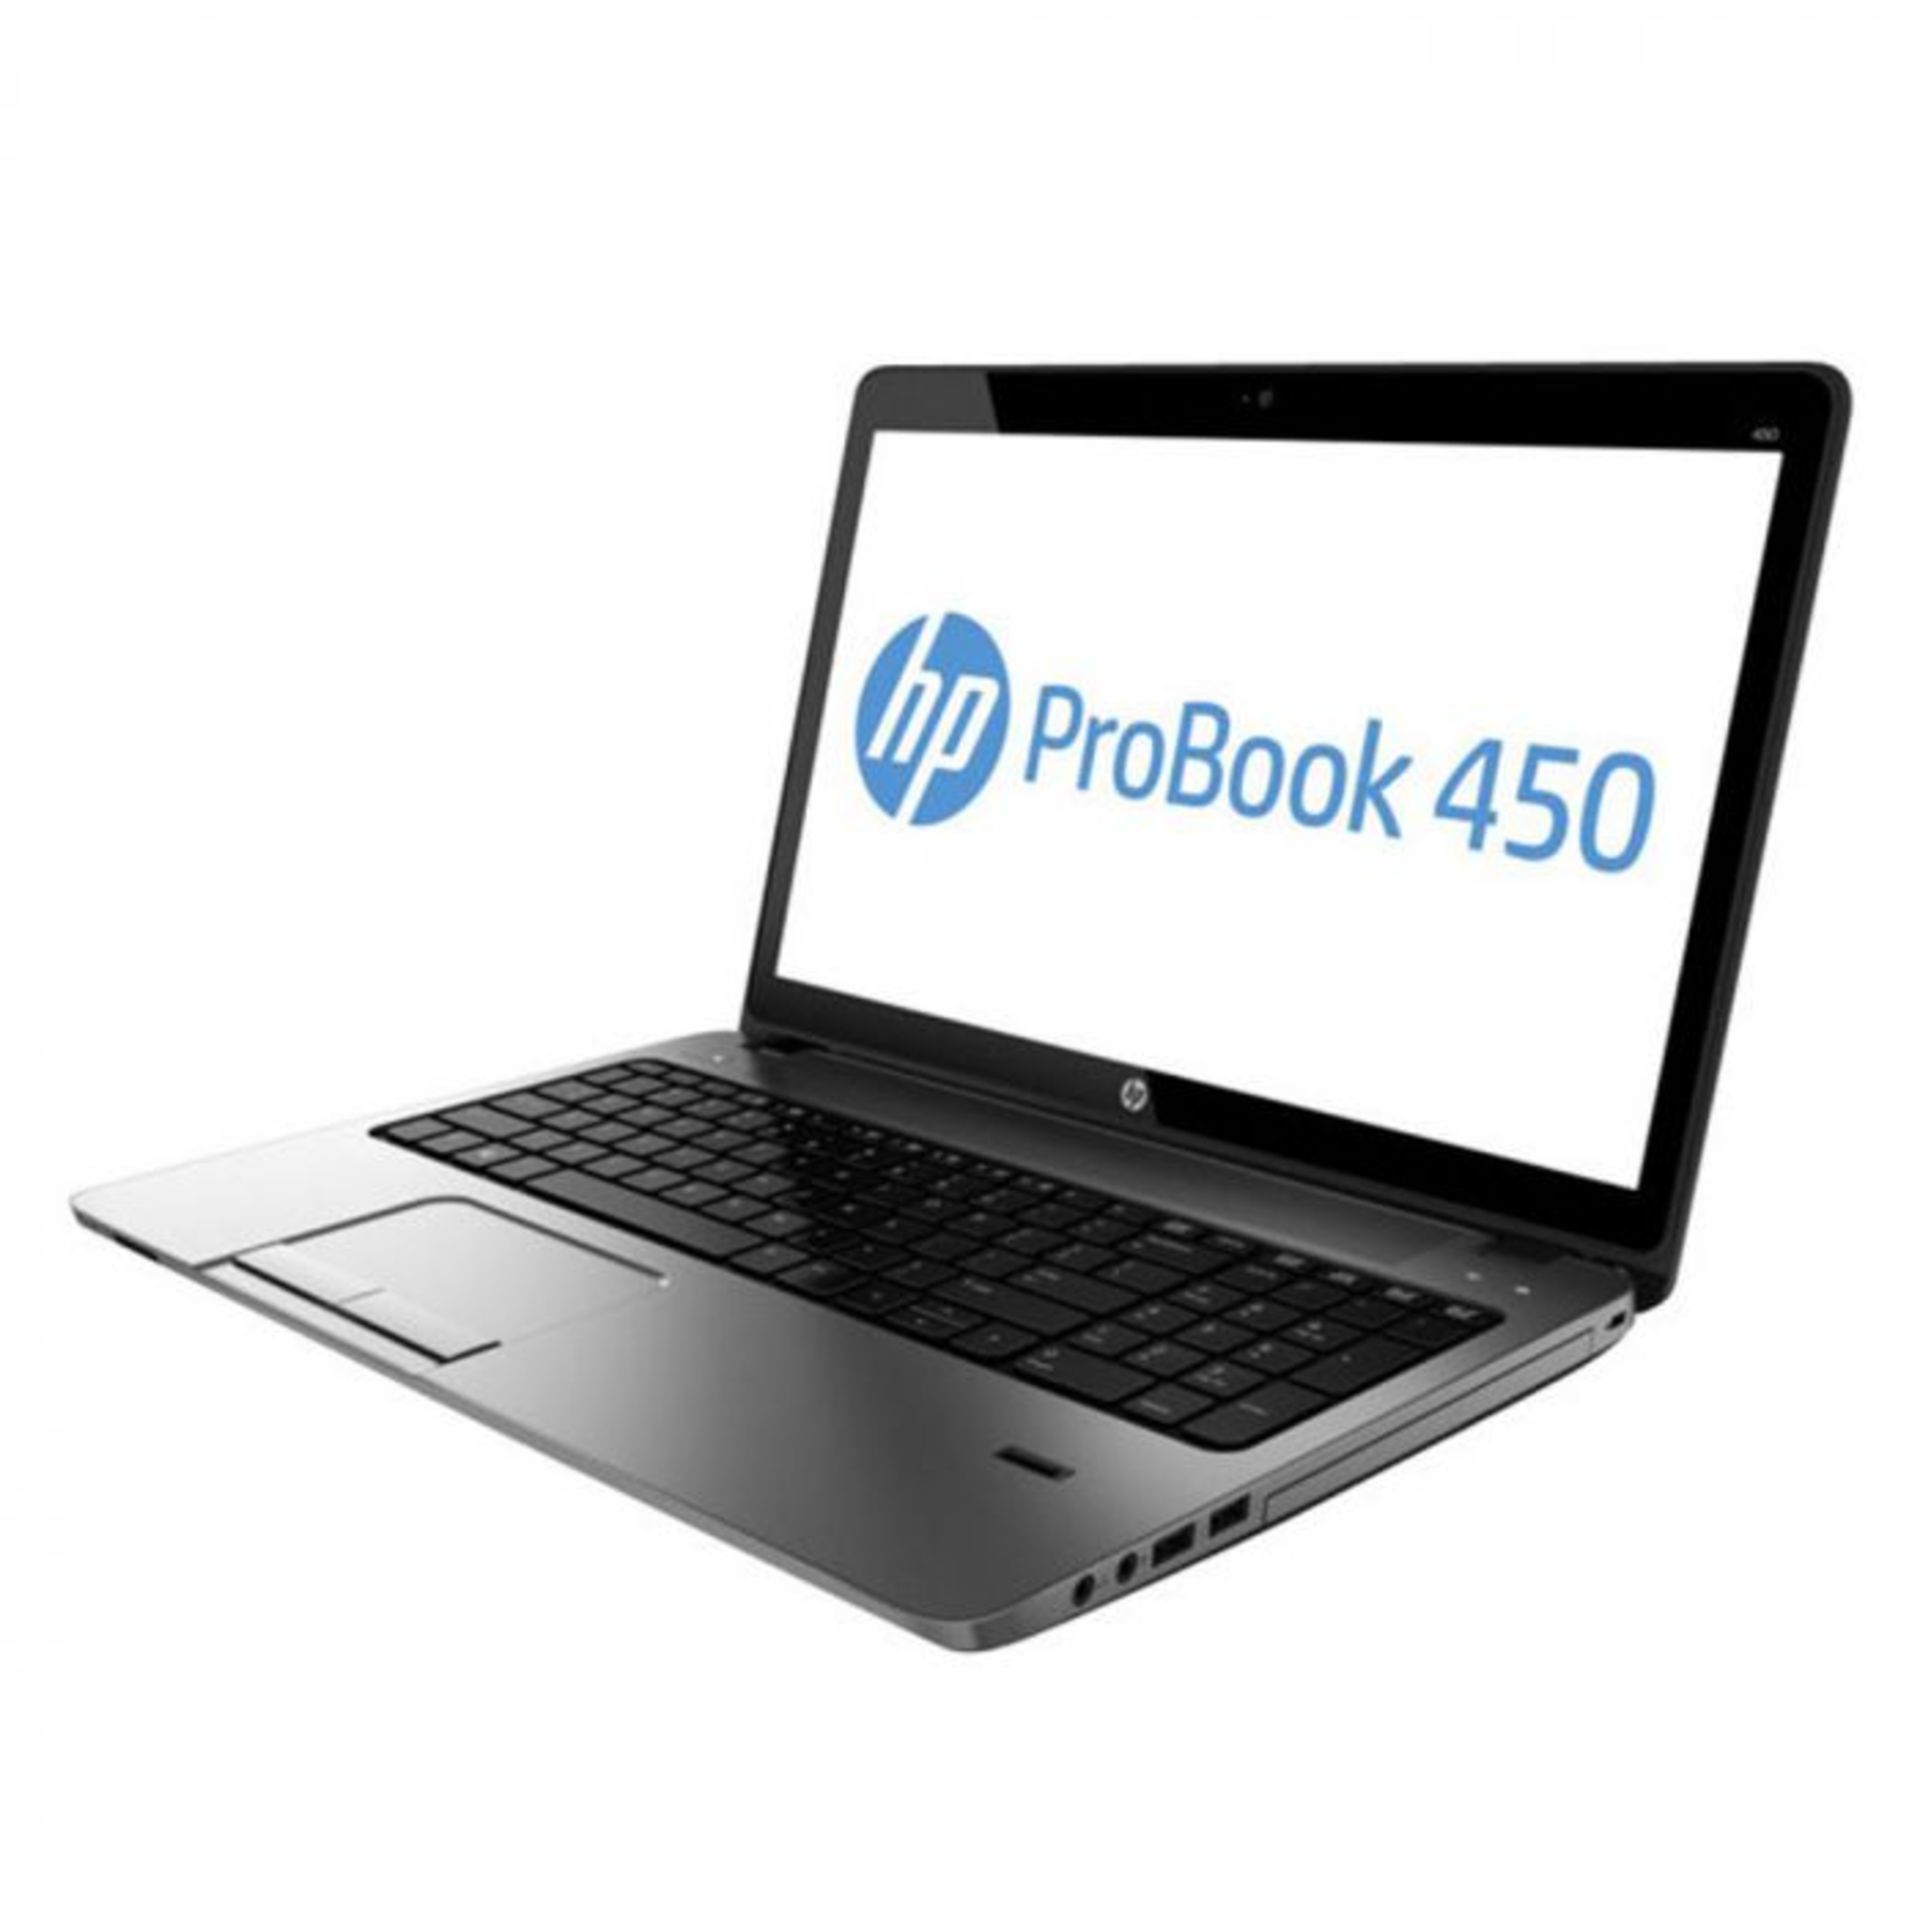 HP Probook 450 G1 Windows 10 Pro 15.6” Intel Core i5-4200M 4GB Memory 250GB HD Office